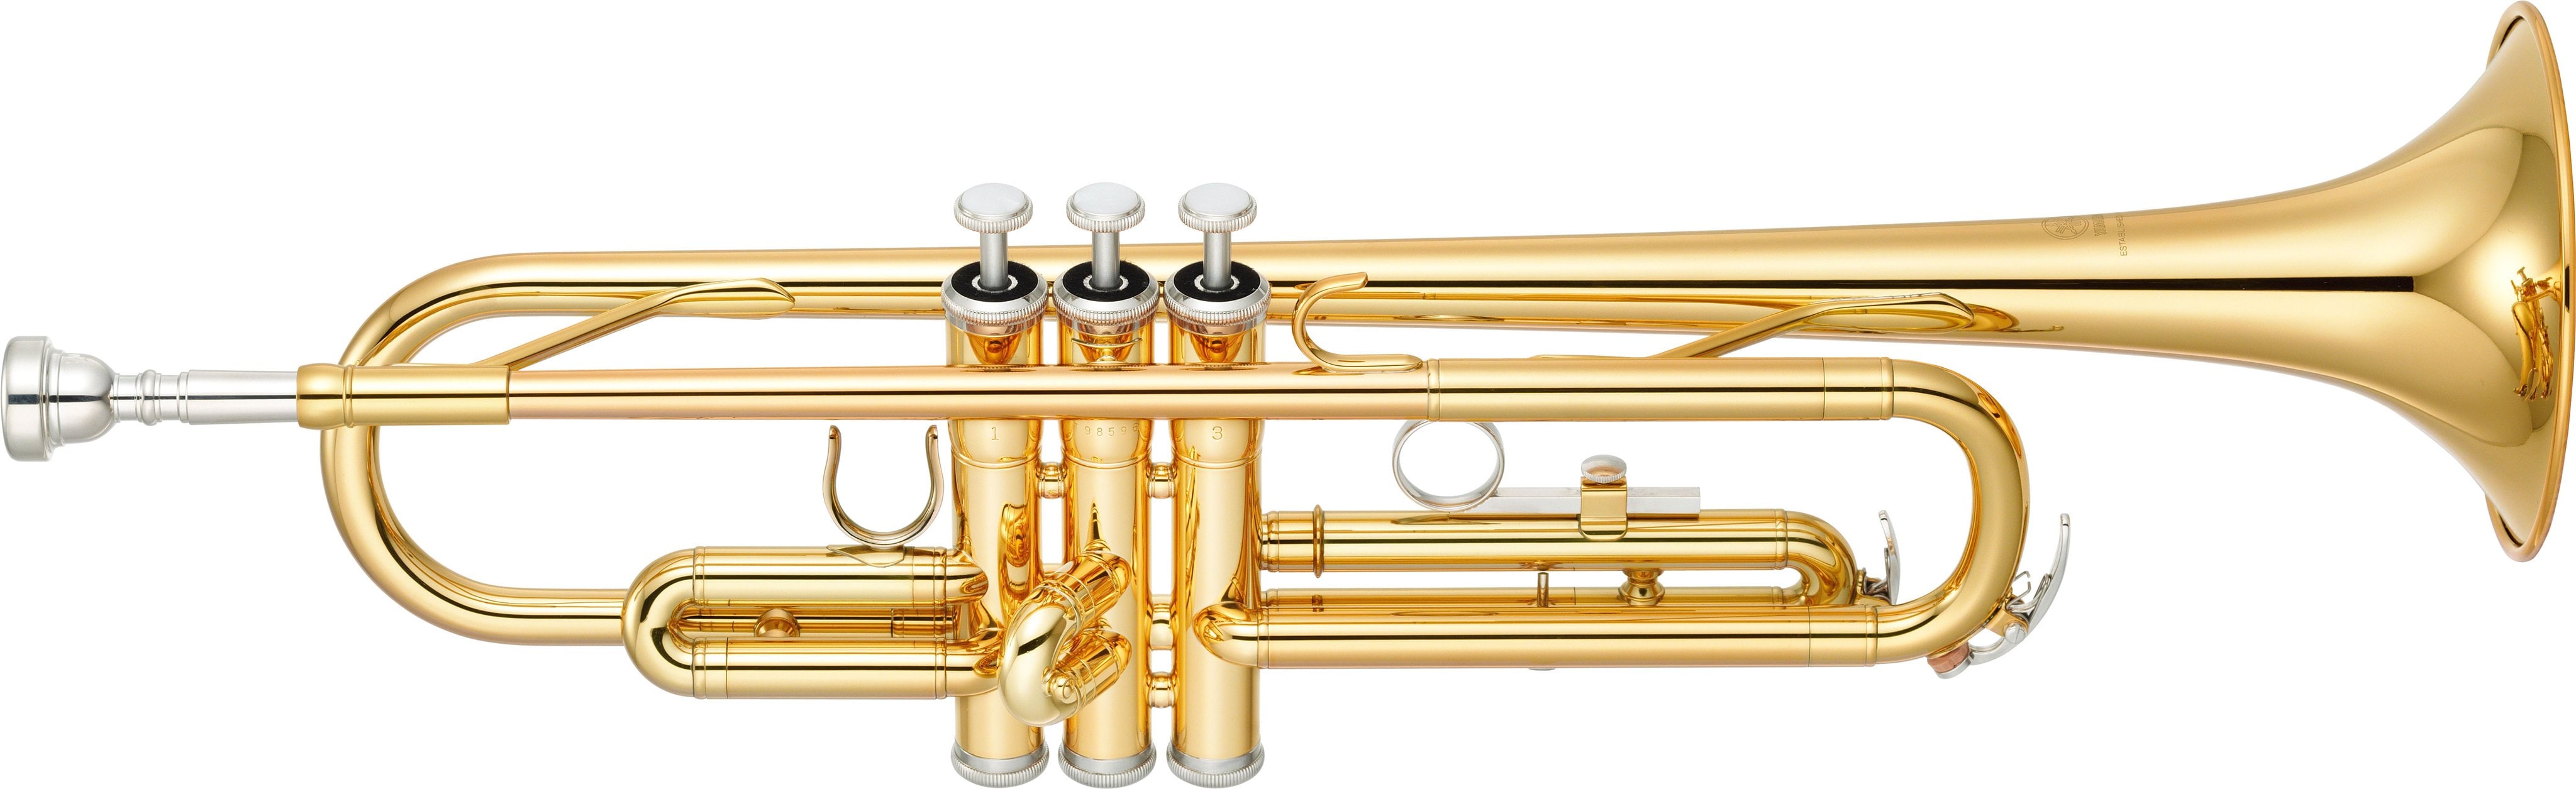 trompeta yamaha ytr 2330